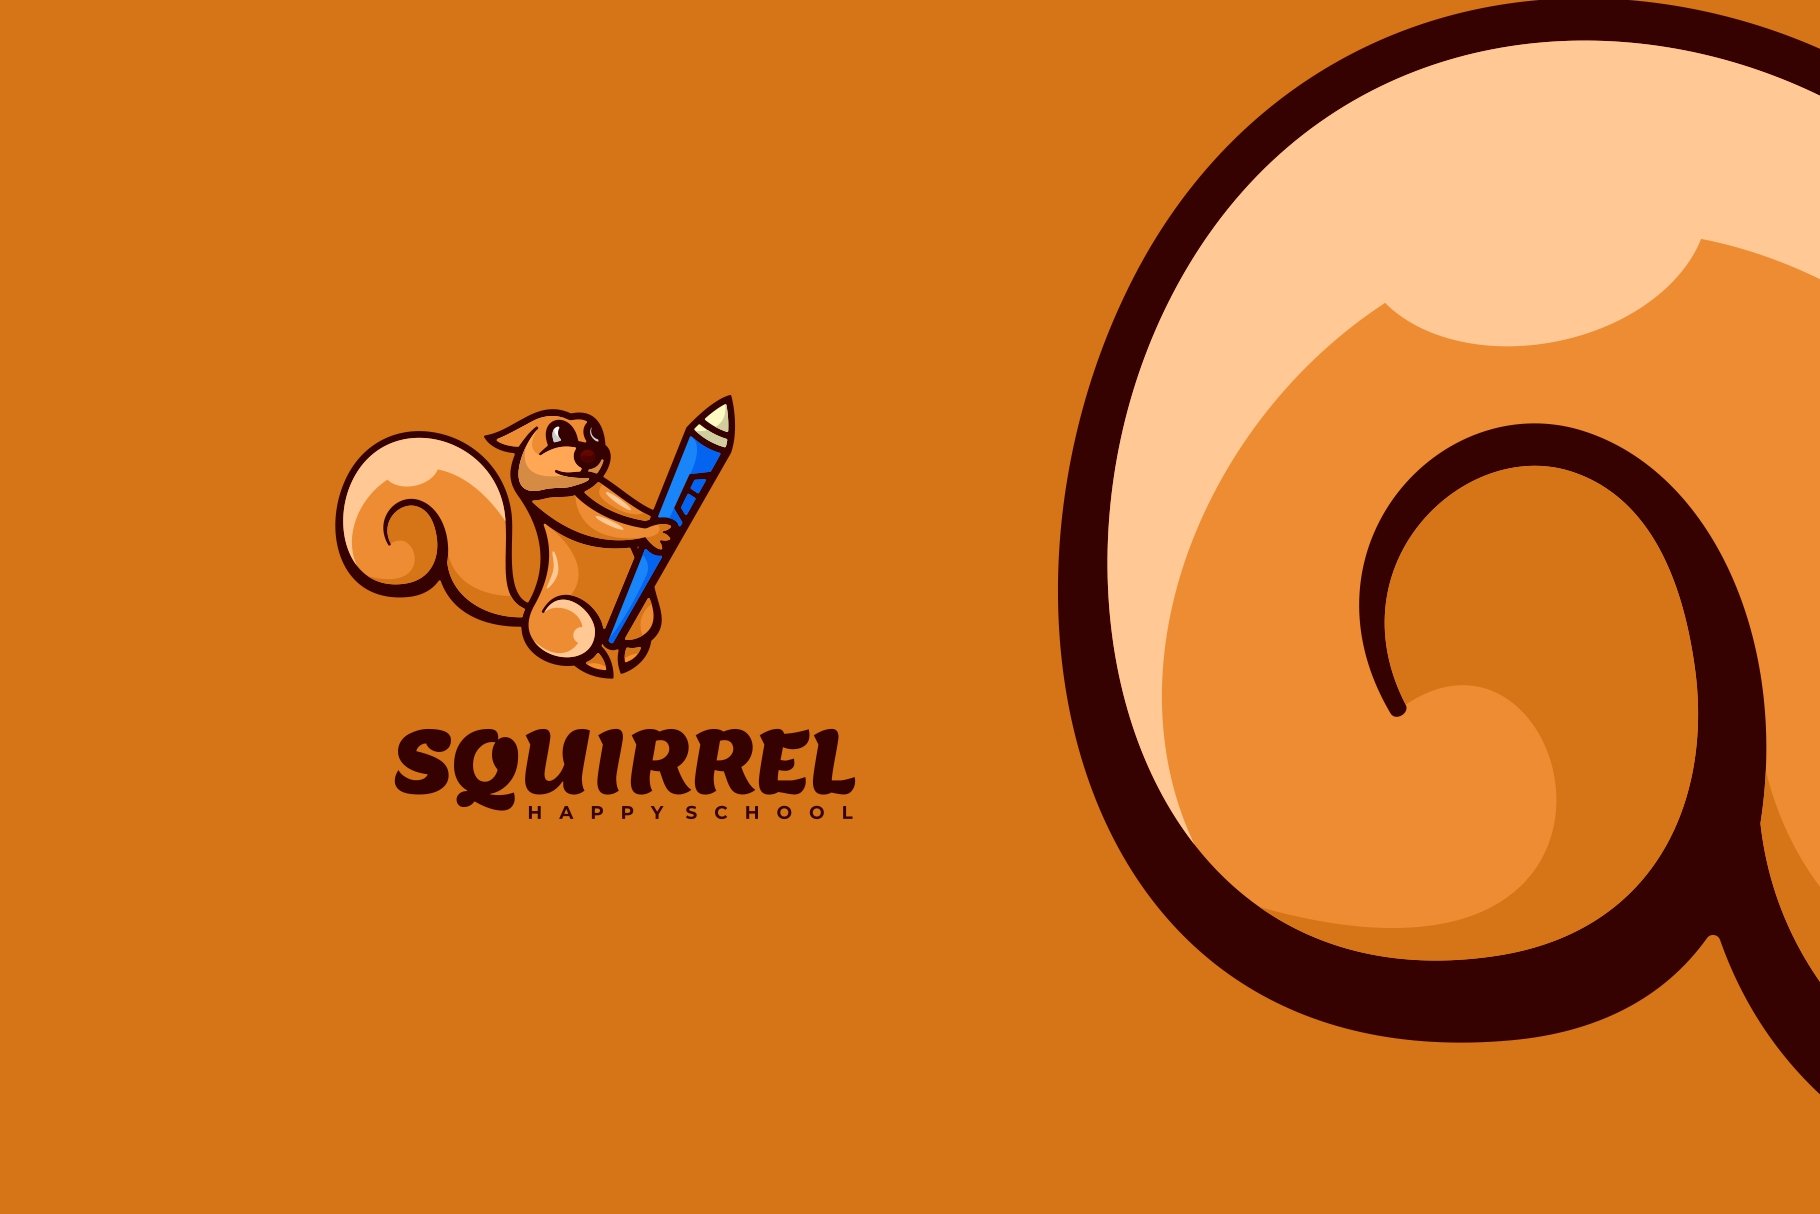 Squirrel Cartoon Logo cover image.